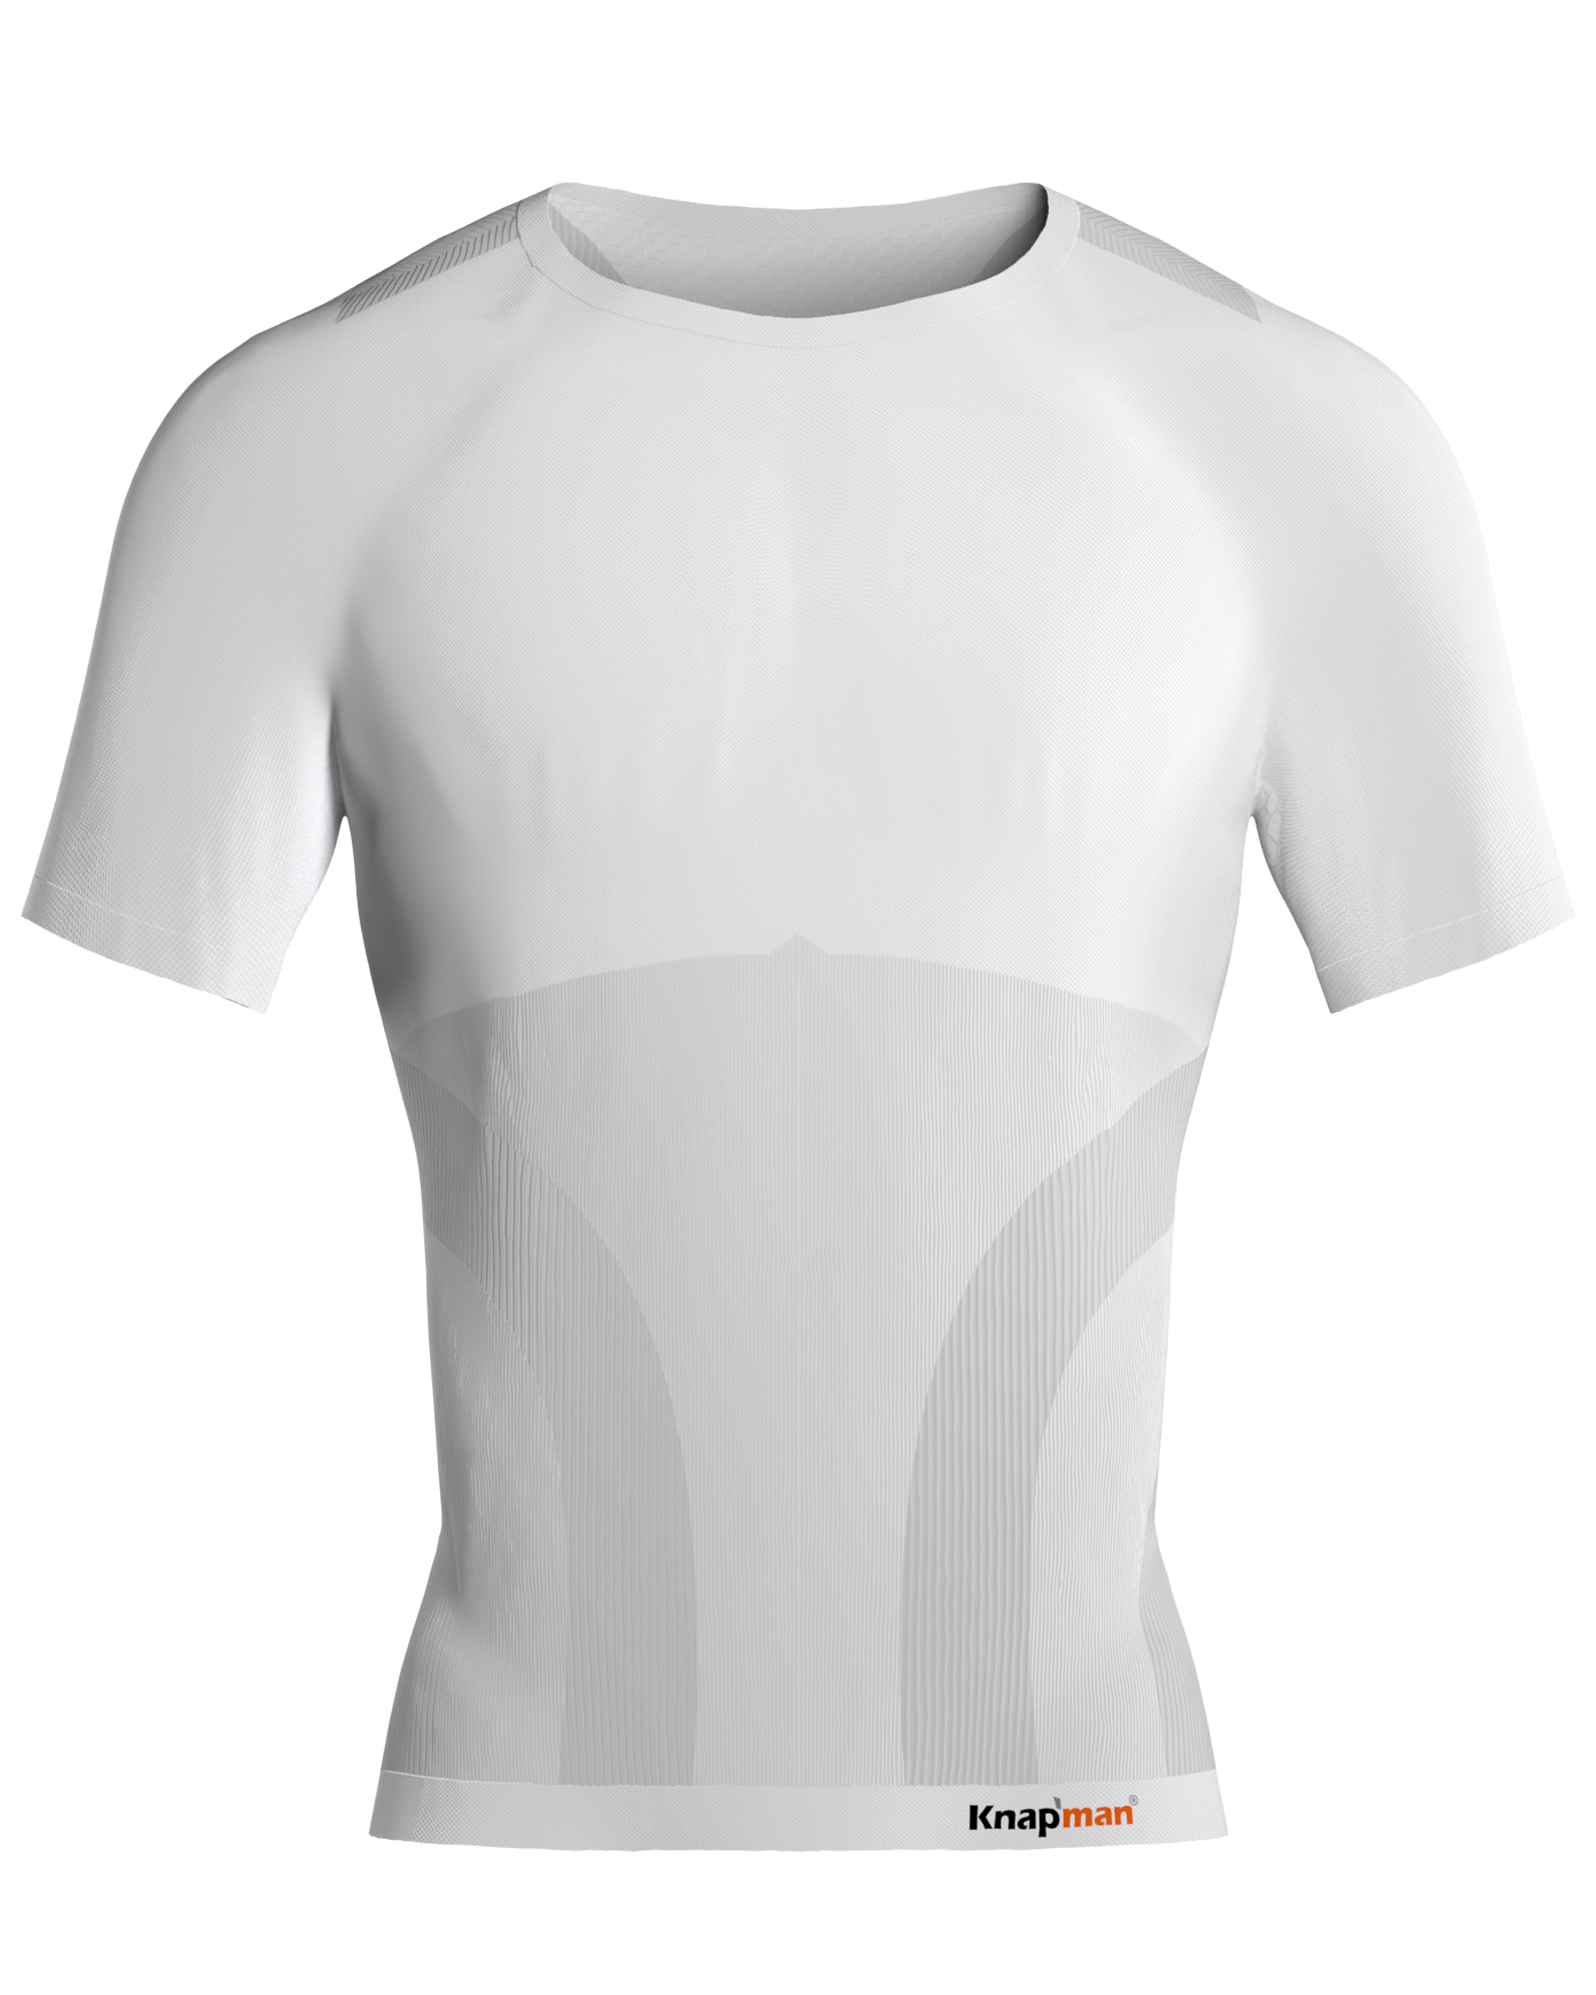 Knapman Pro Performance Compression Baselayer Shirt Short Sleeve White -  Knapman Compression Shirts - MEN - Knapman